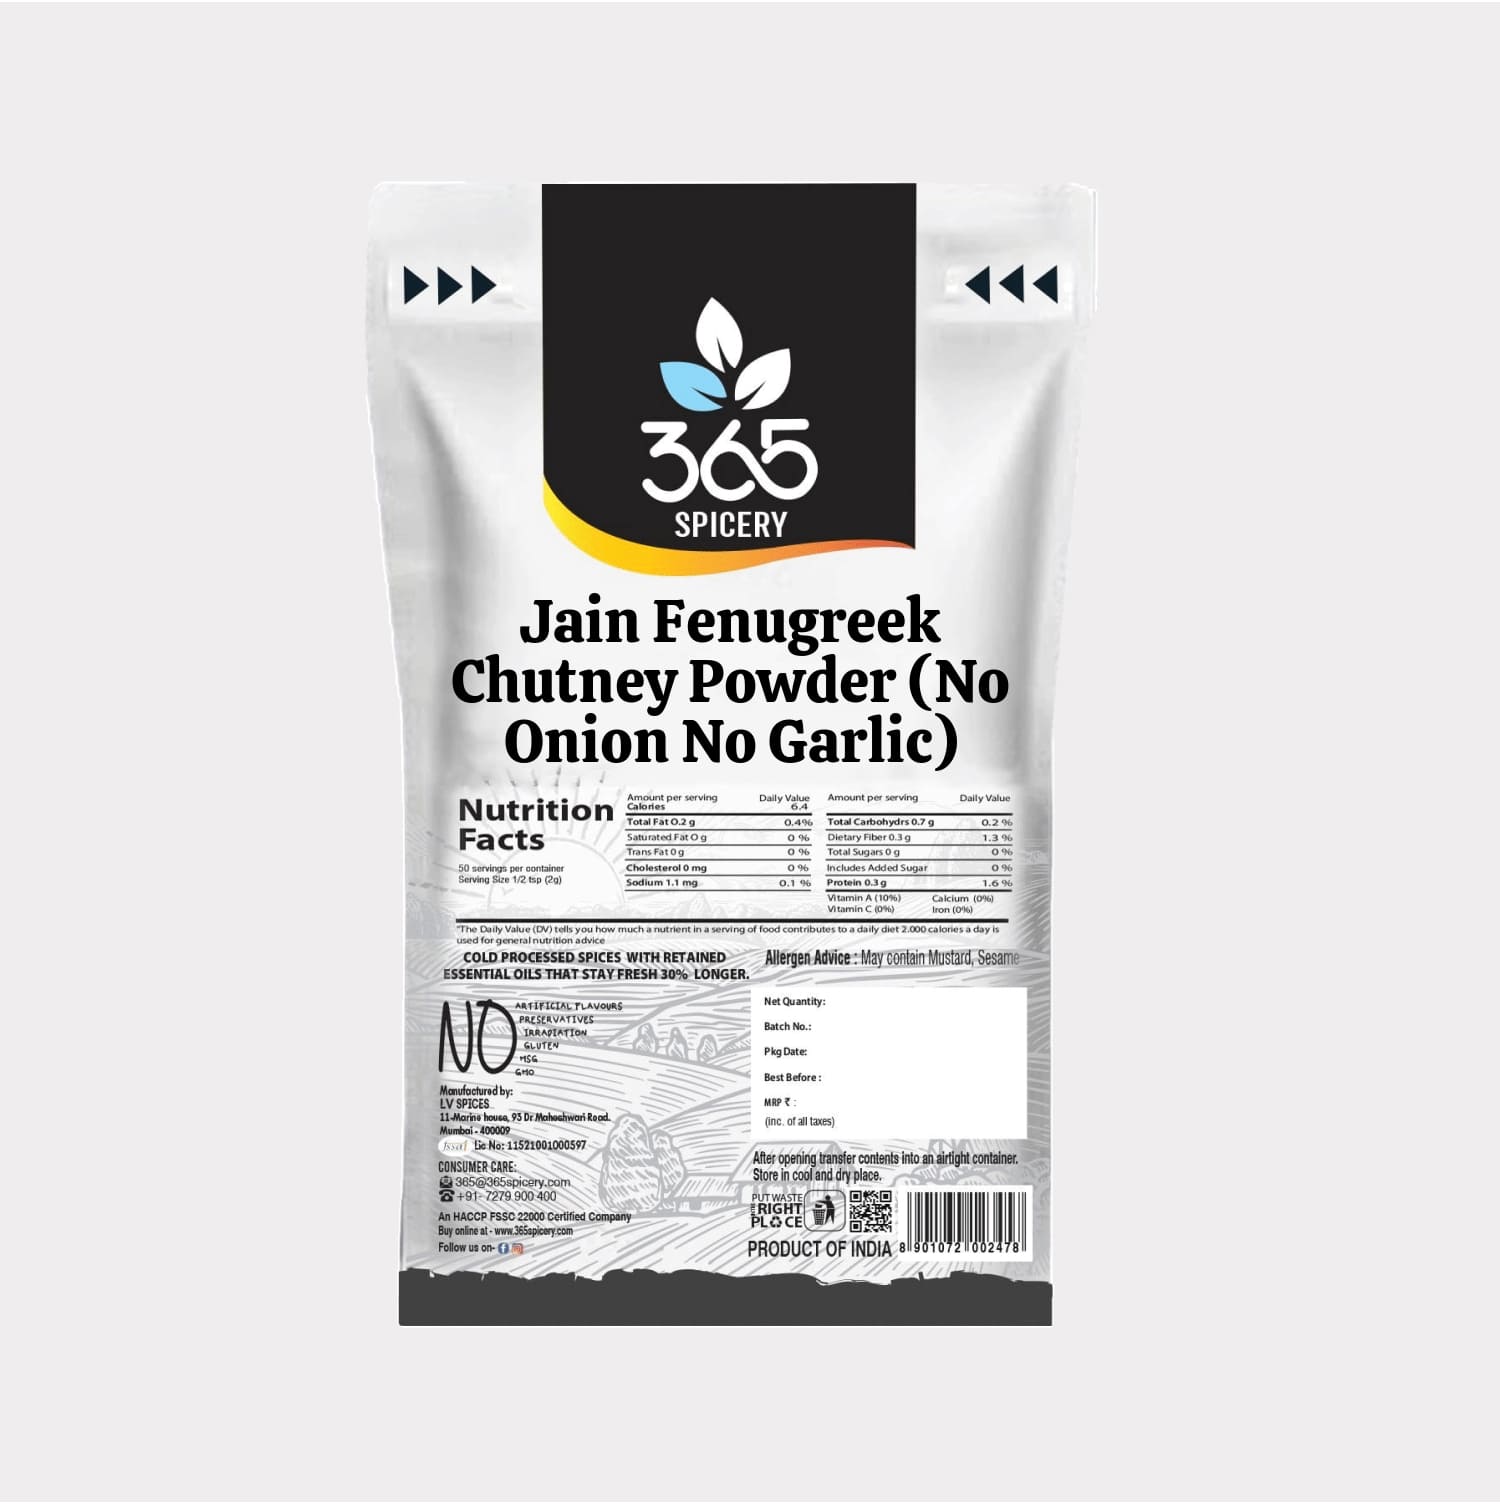 Jain Fenugreek Chutney Powder (No Onion No Garlic)